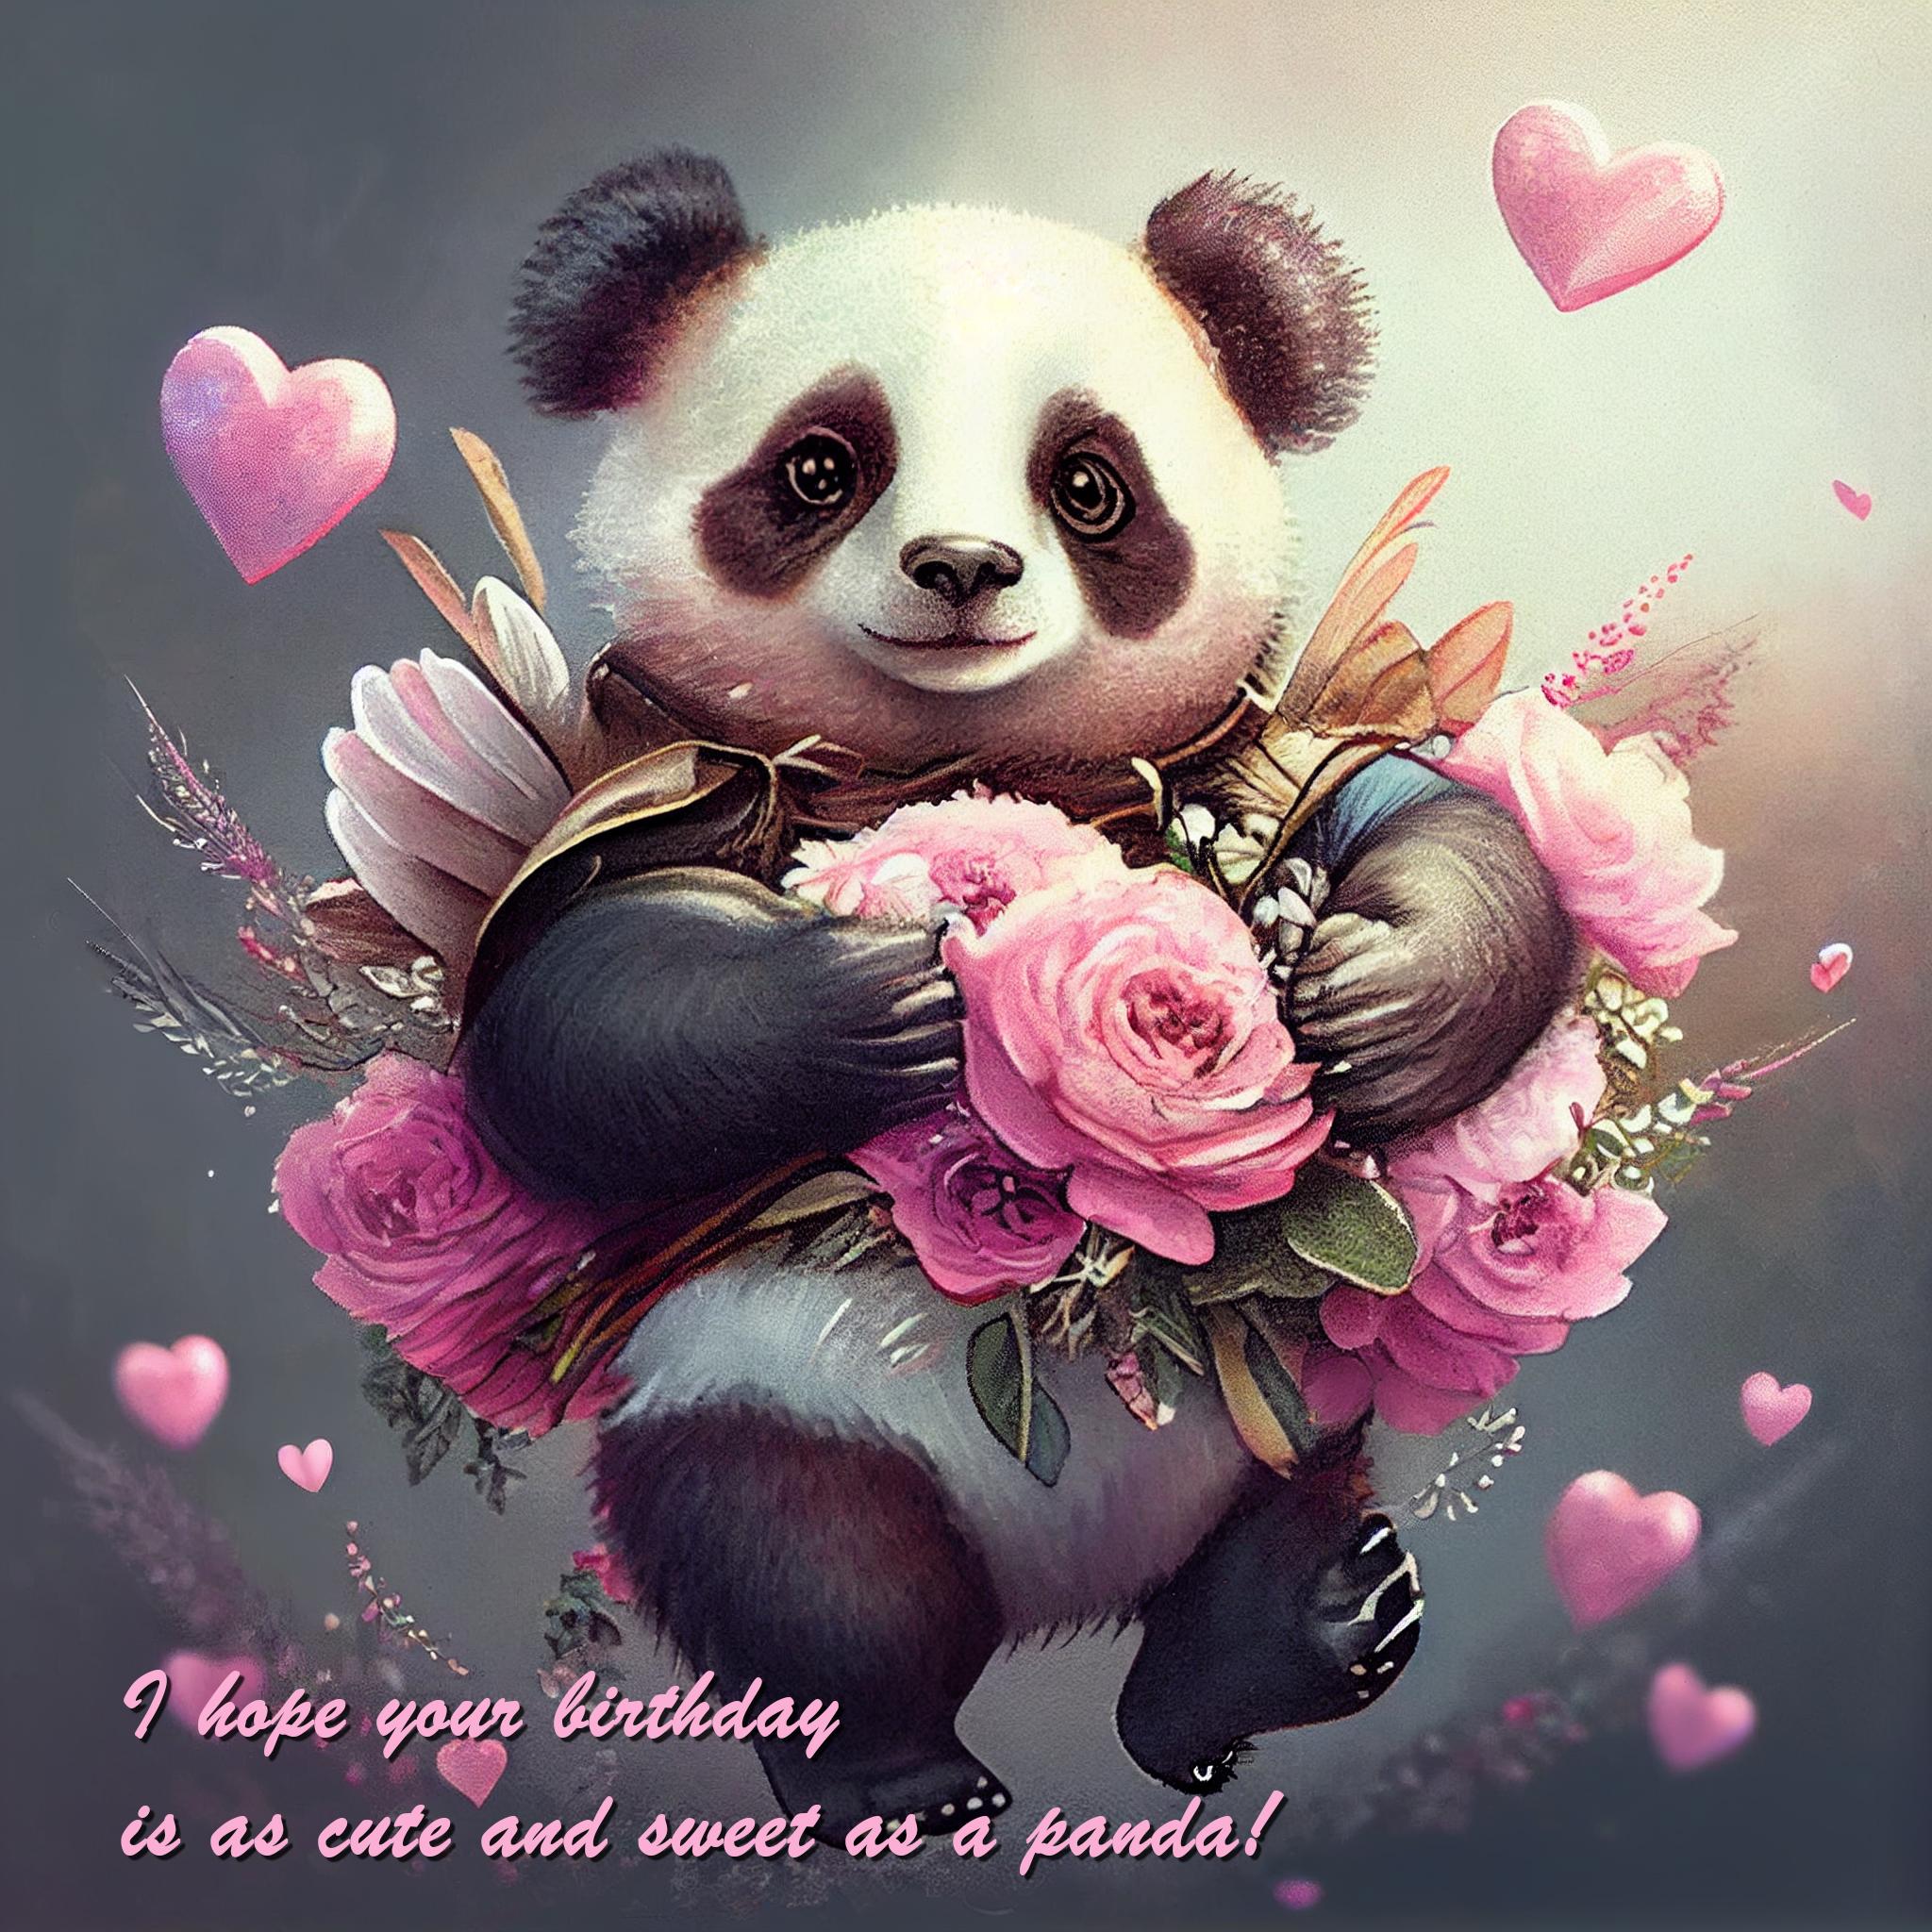 happy birthday from panda NFT cruzo